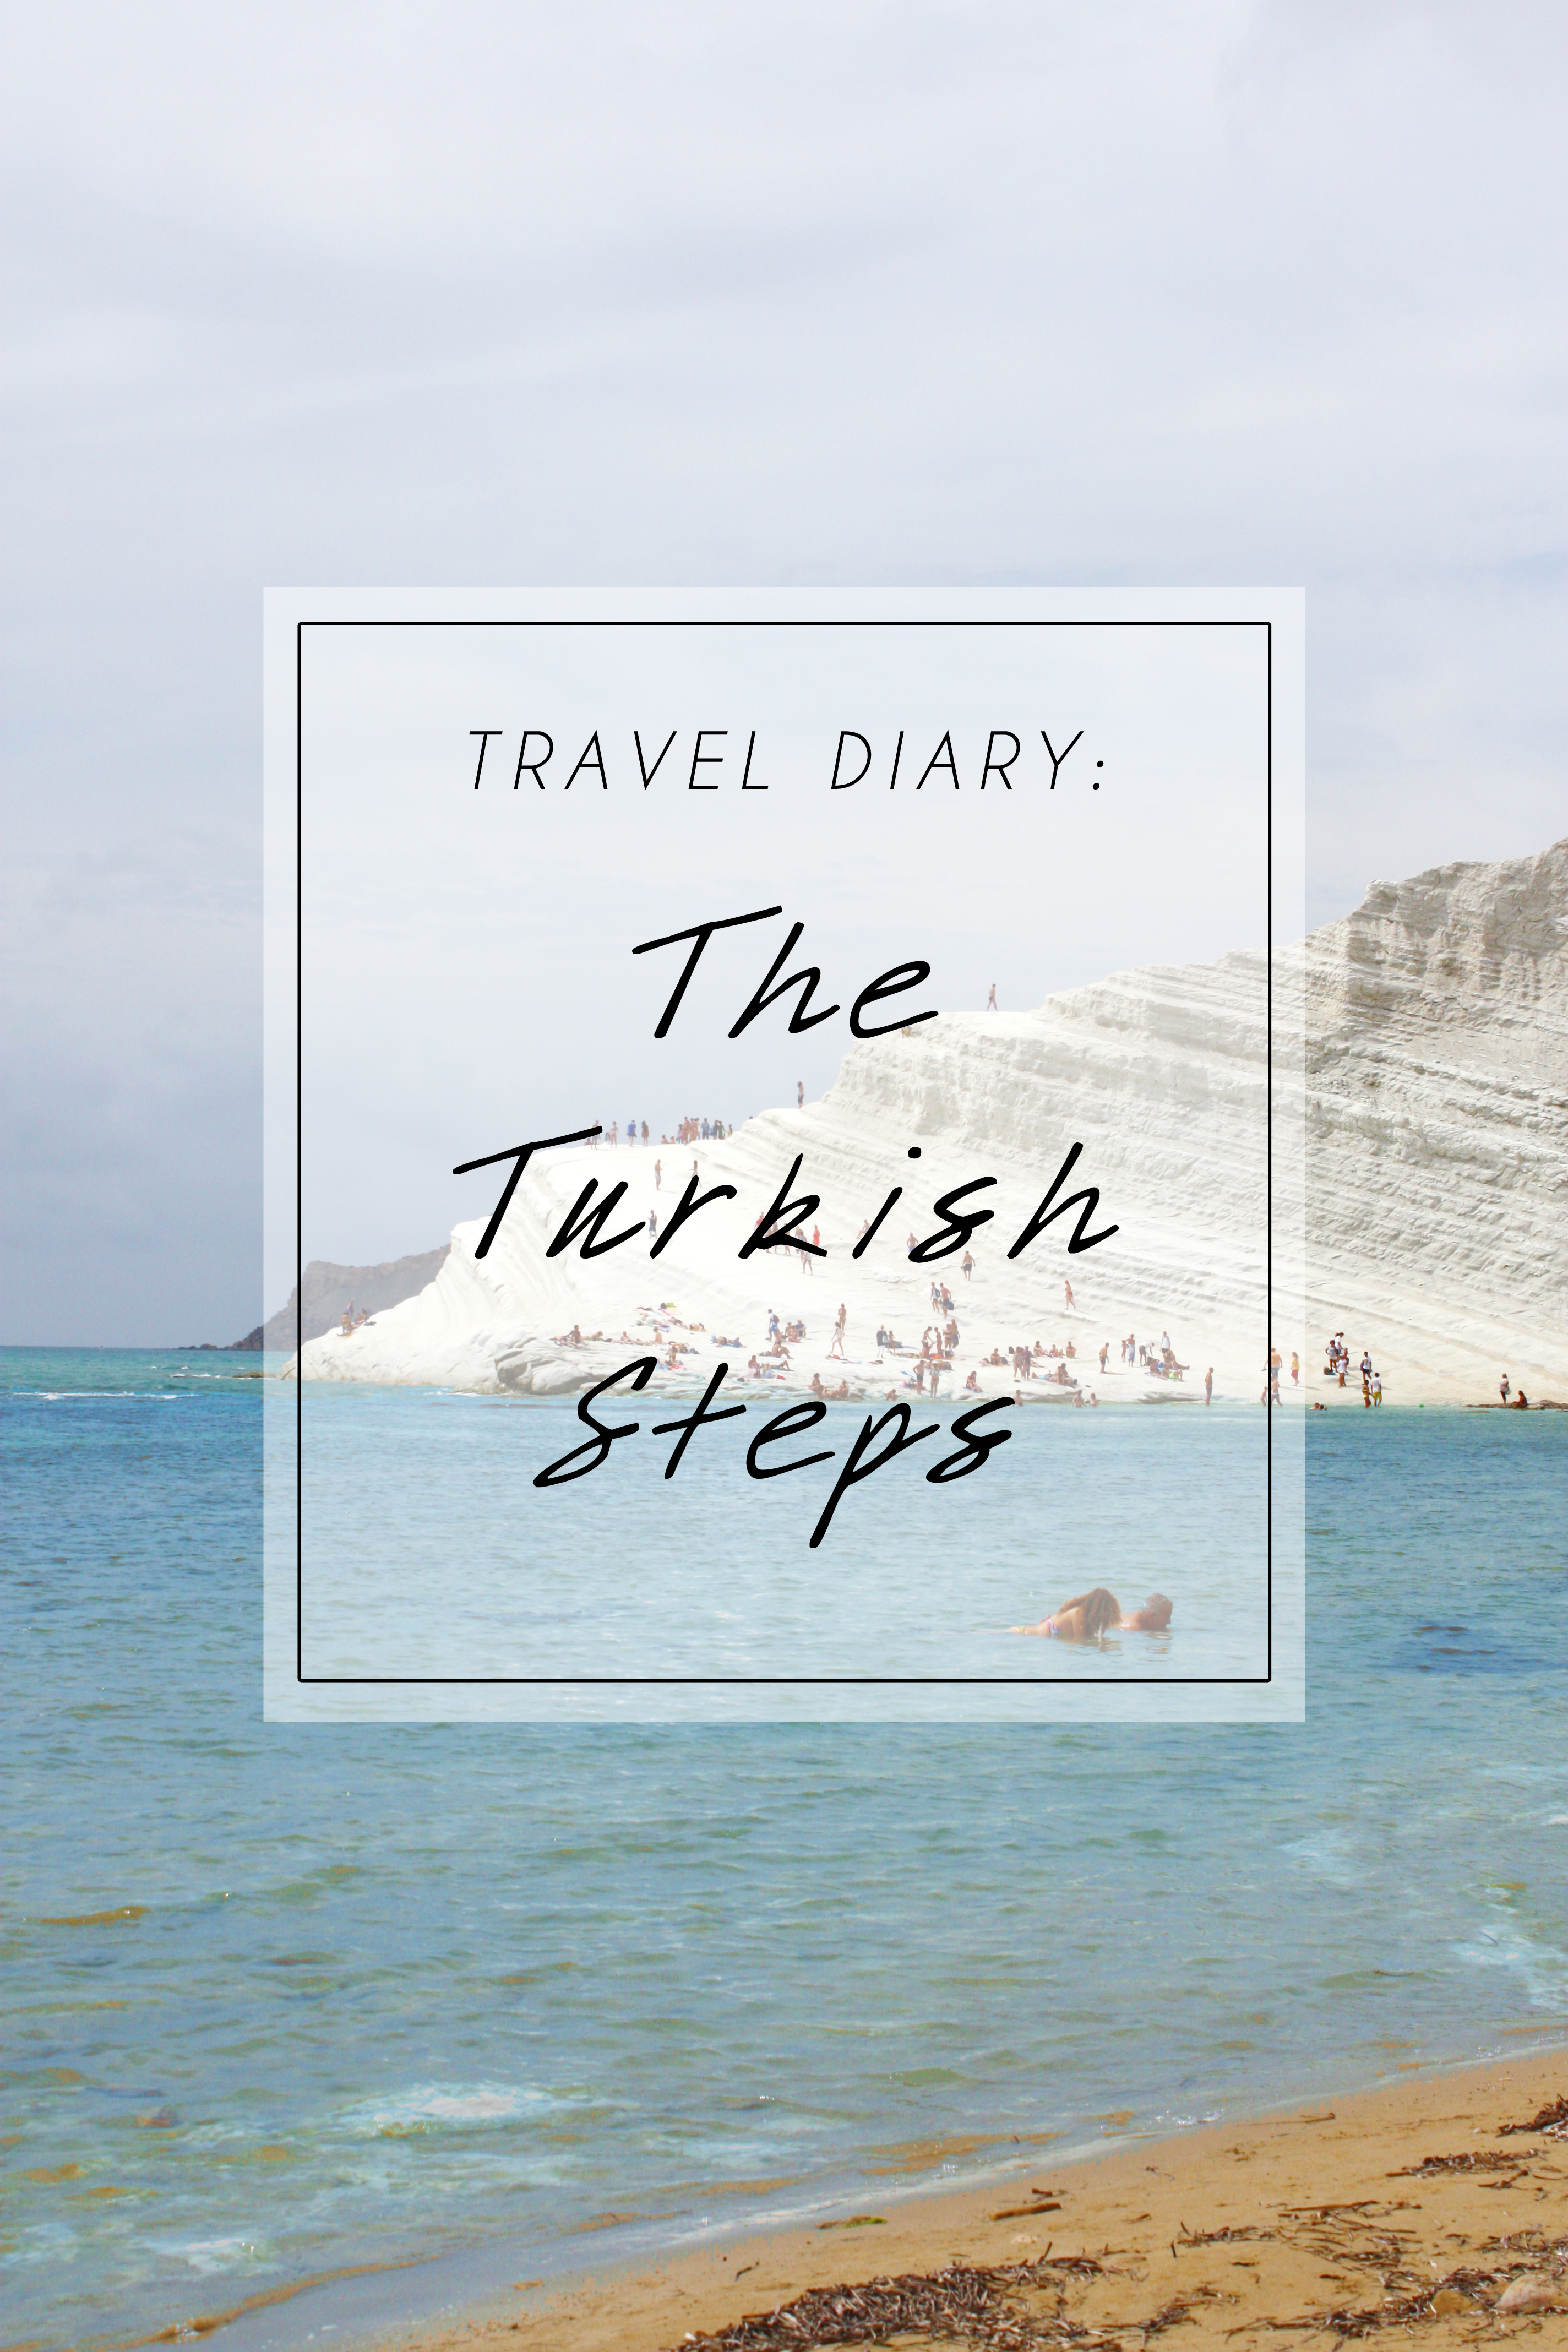 The Turkish Steps in Sicily - Quartz & Leisure